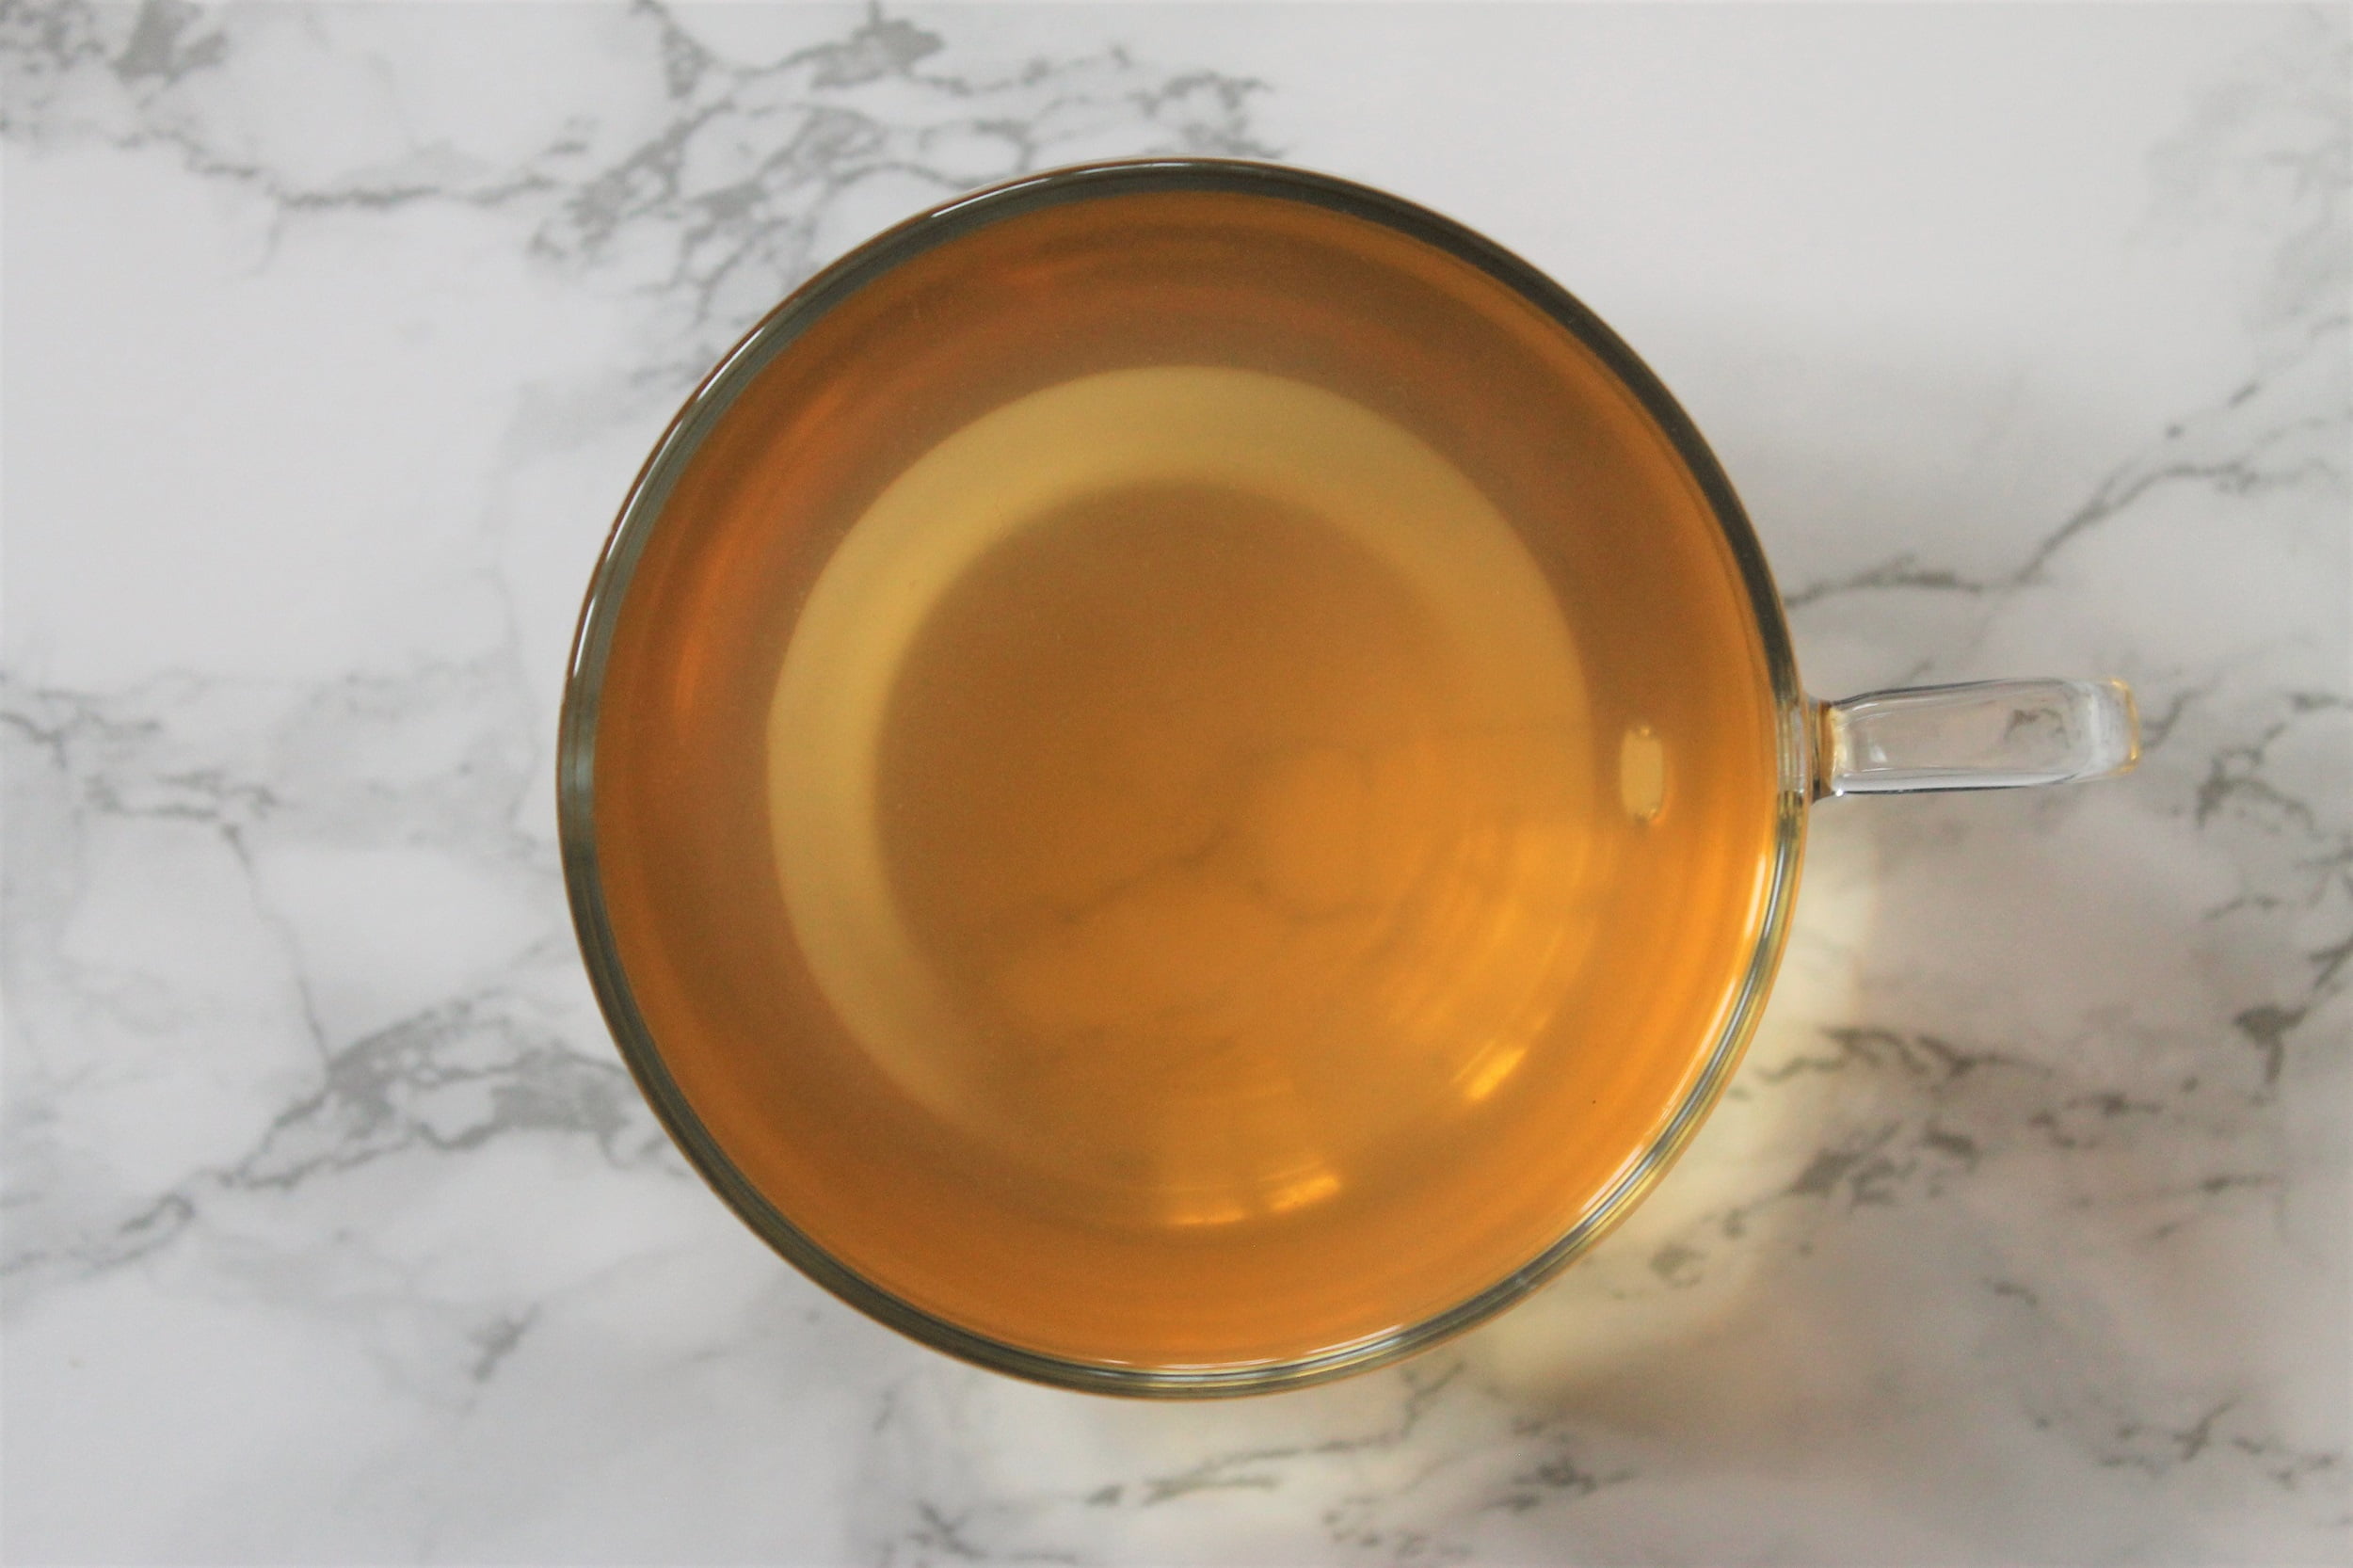 fresh apple tea in teacup